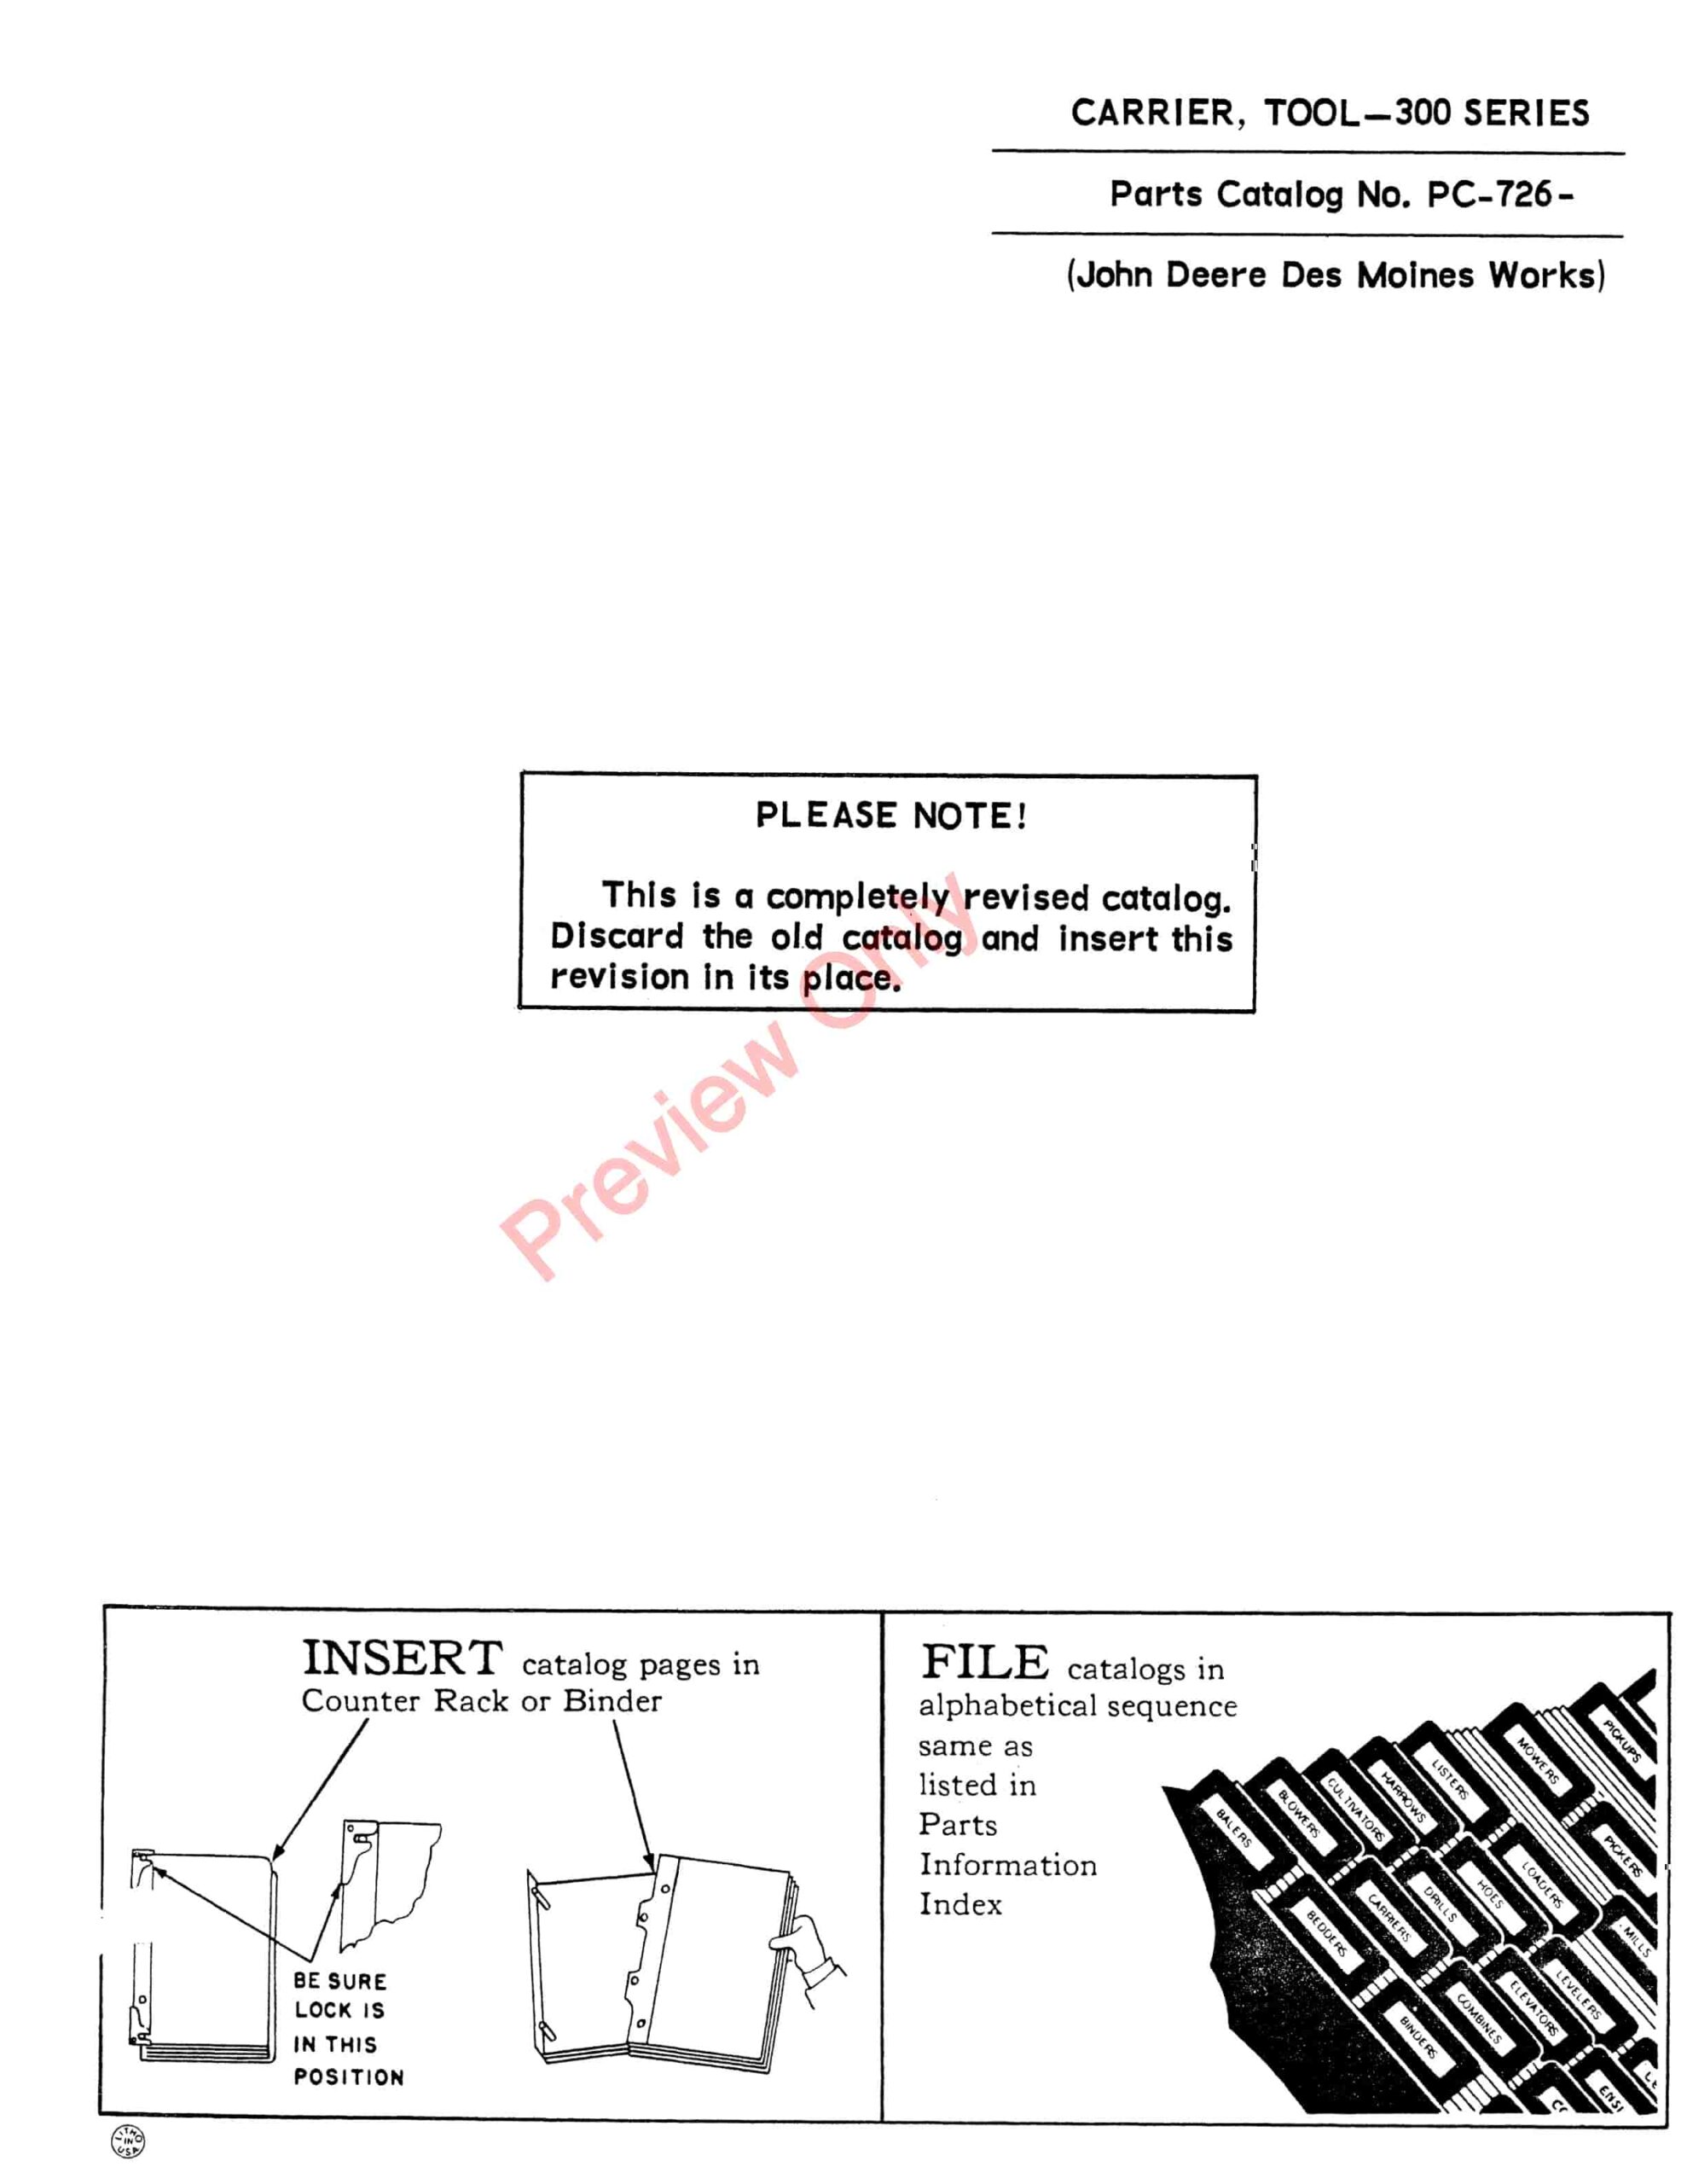 John Deere Tool Carrier – 300 Series Parts Catalog PC726 01JAN63-1